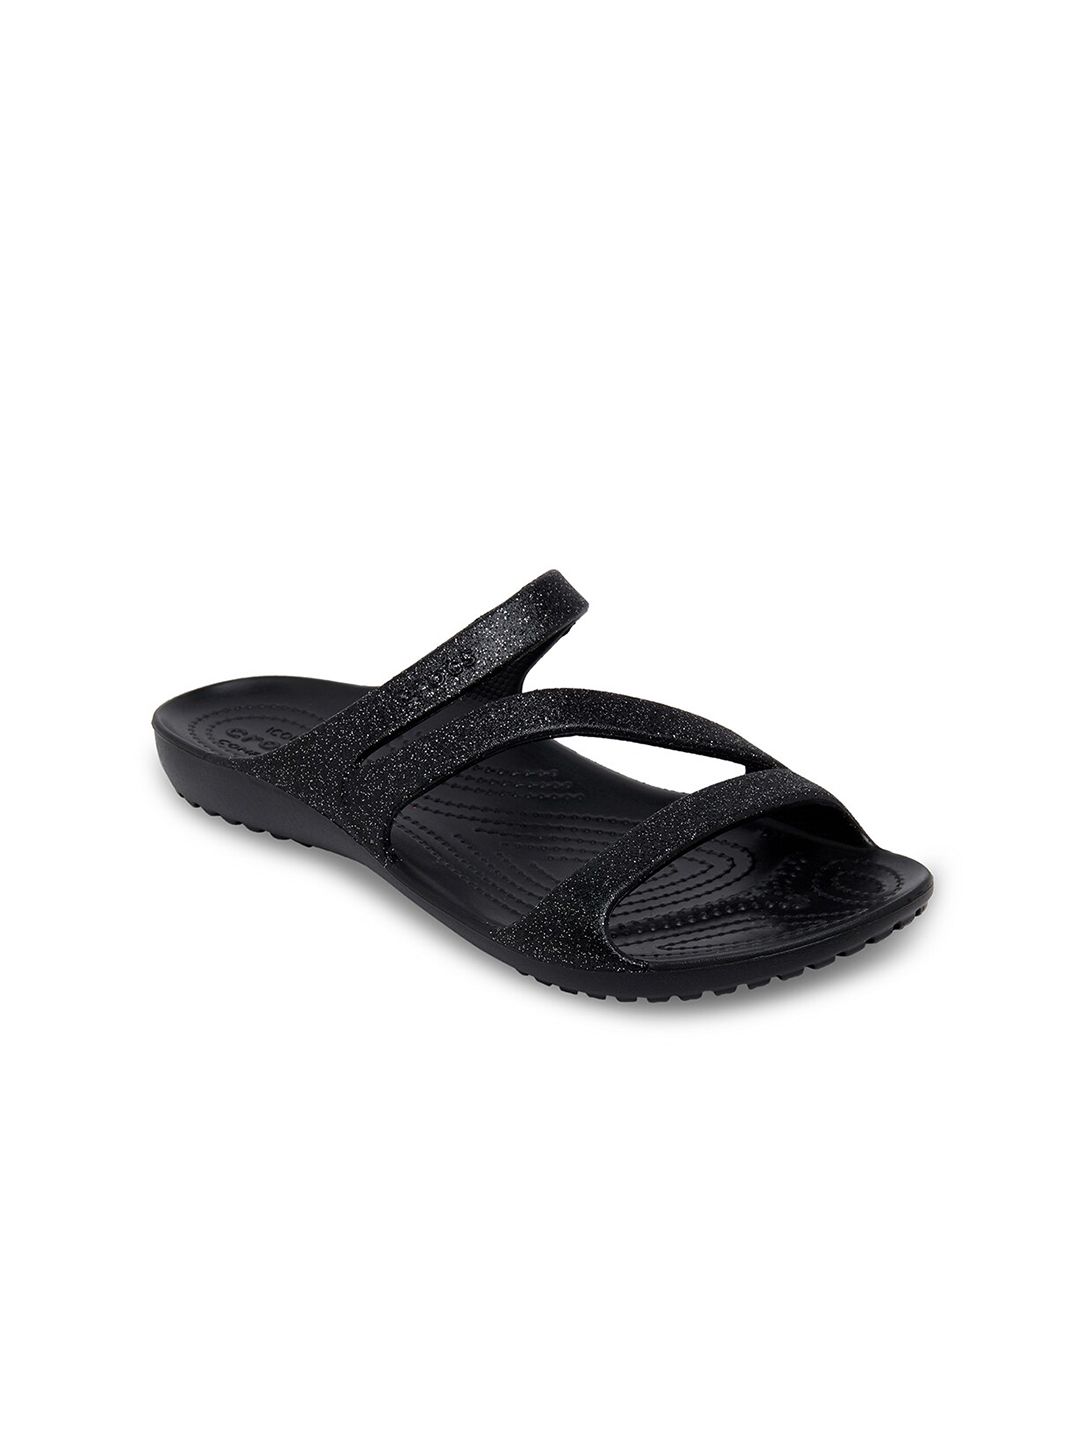 Crocs Kadee Women Black Solid Sliders Price in India